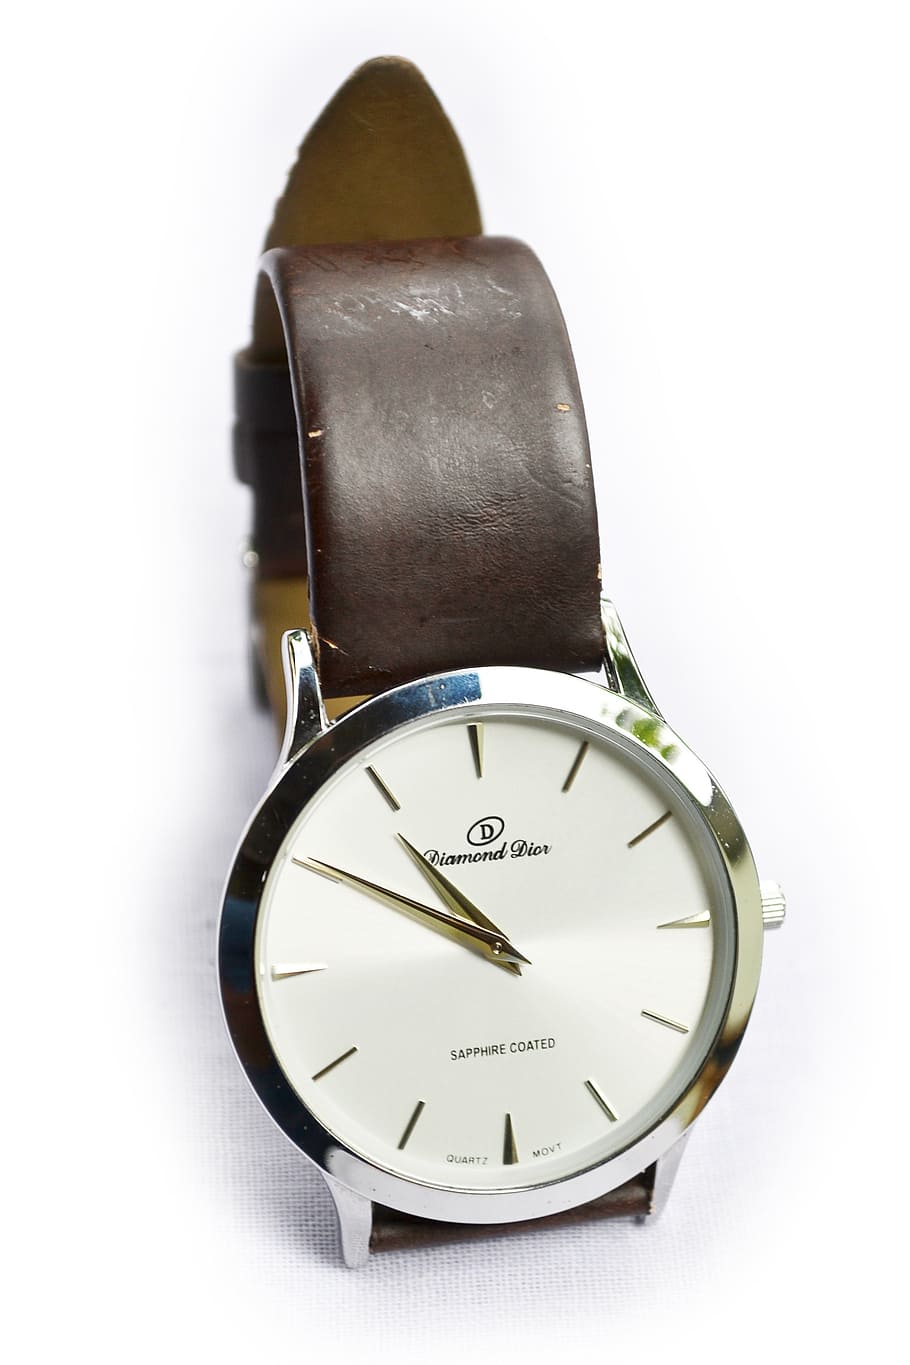 round silver-colored analog, watch, 9:50, wrist watch, clock, time, style, fashion, menswear, glossy